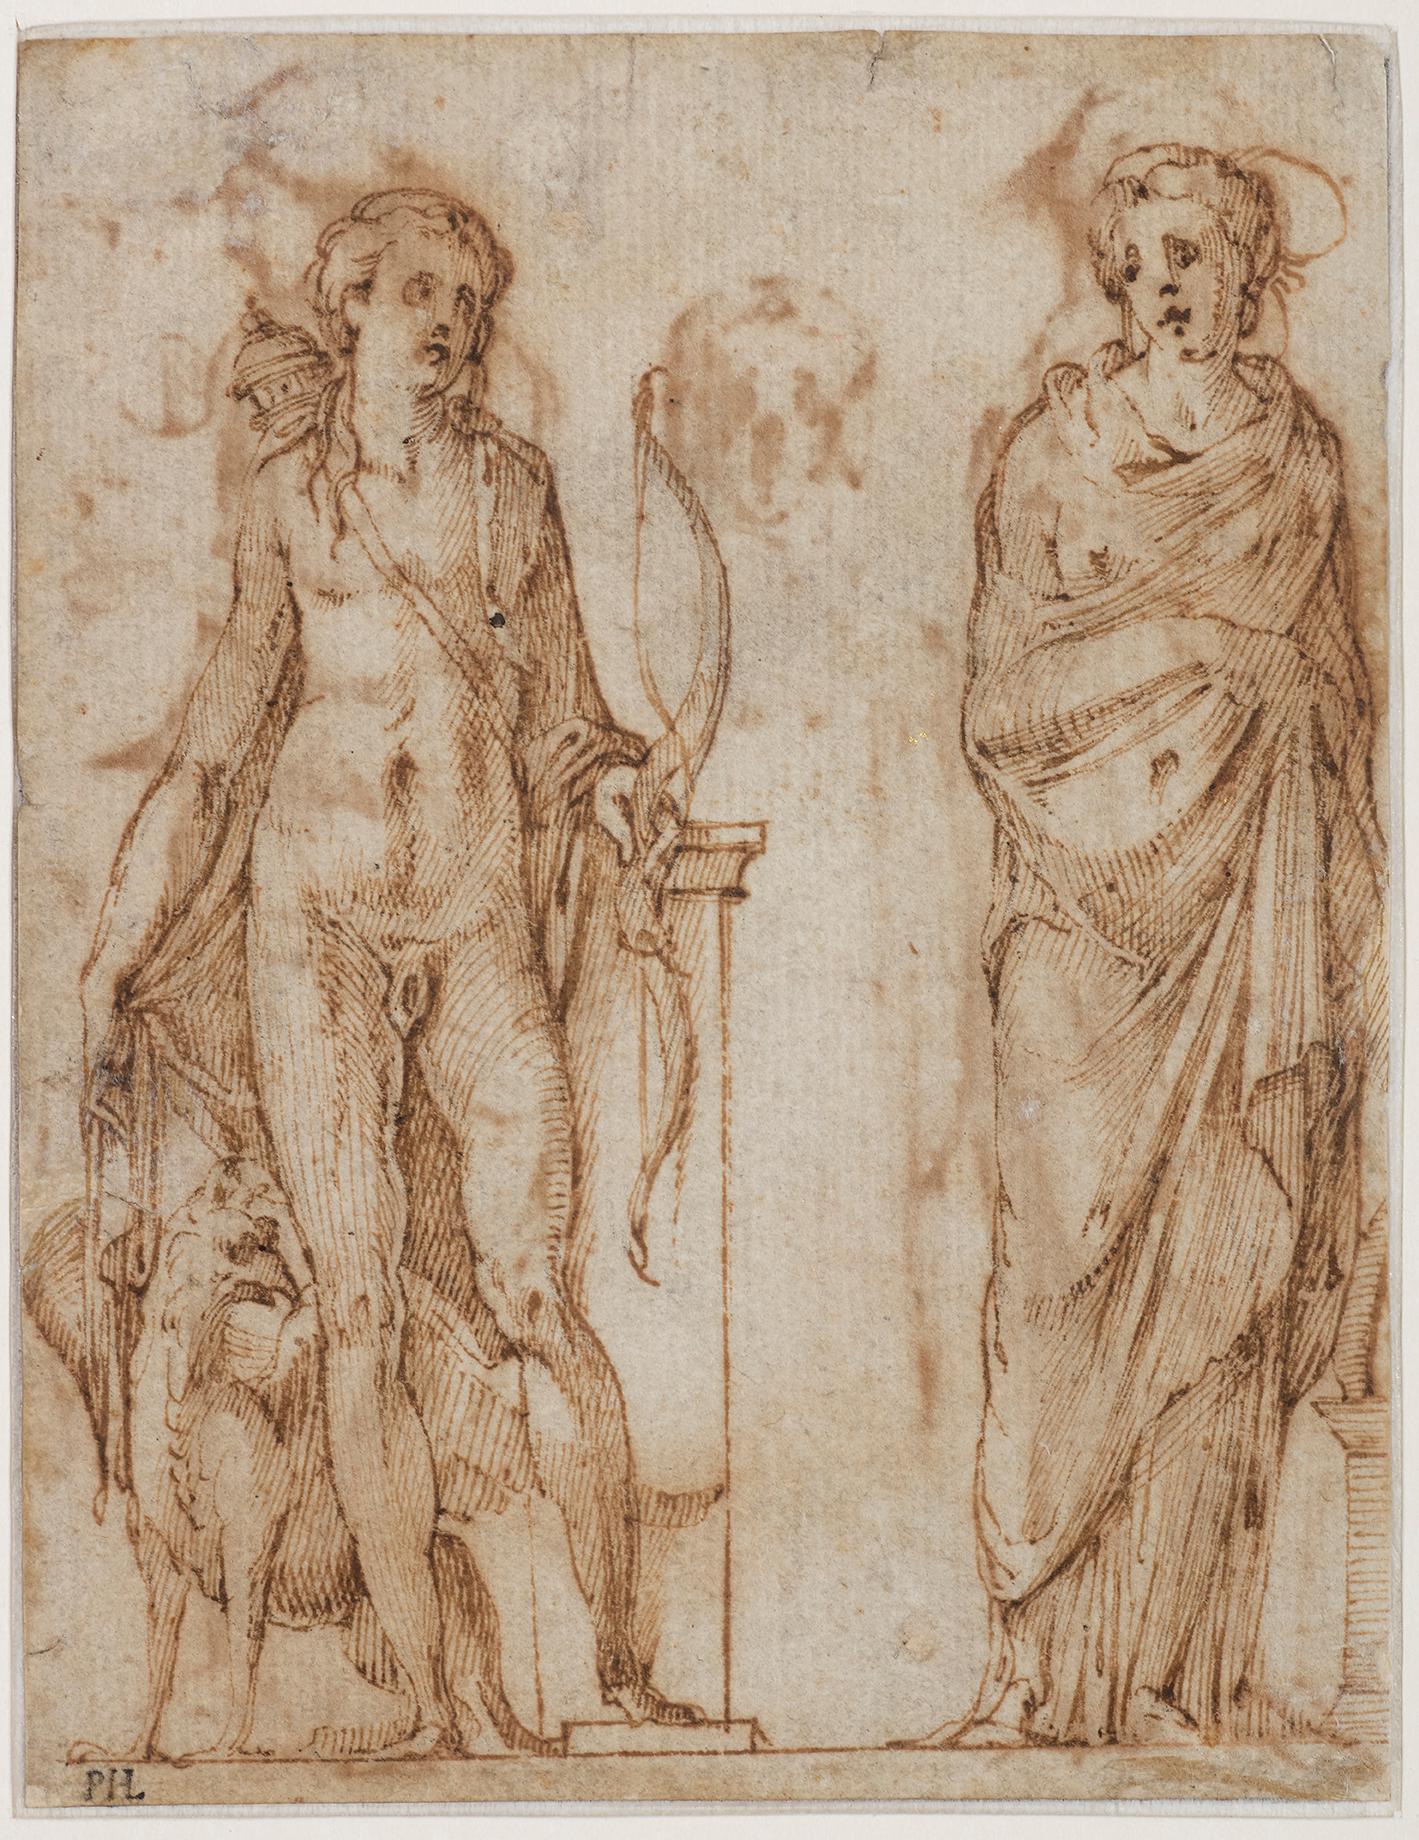 Apollo and the Muses, a Renaissance drawing attributed to Girolamo da Carpi